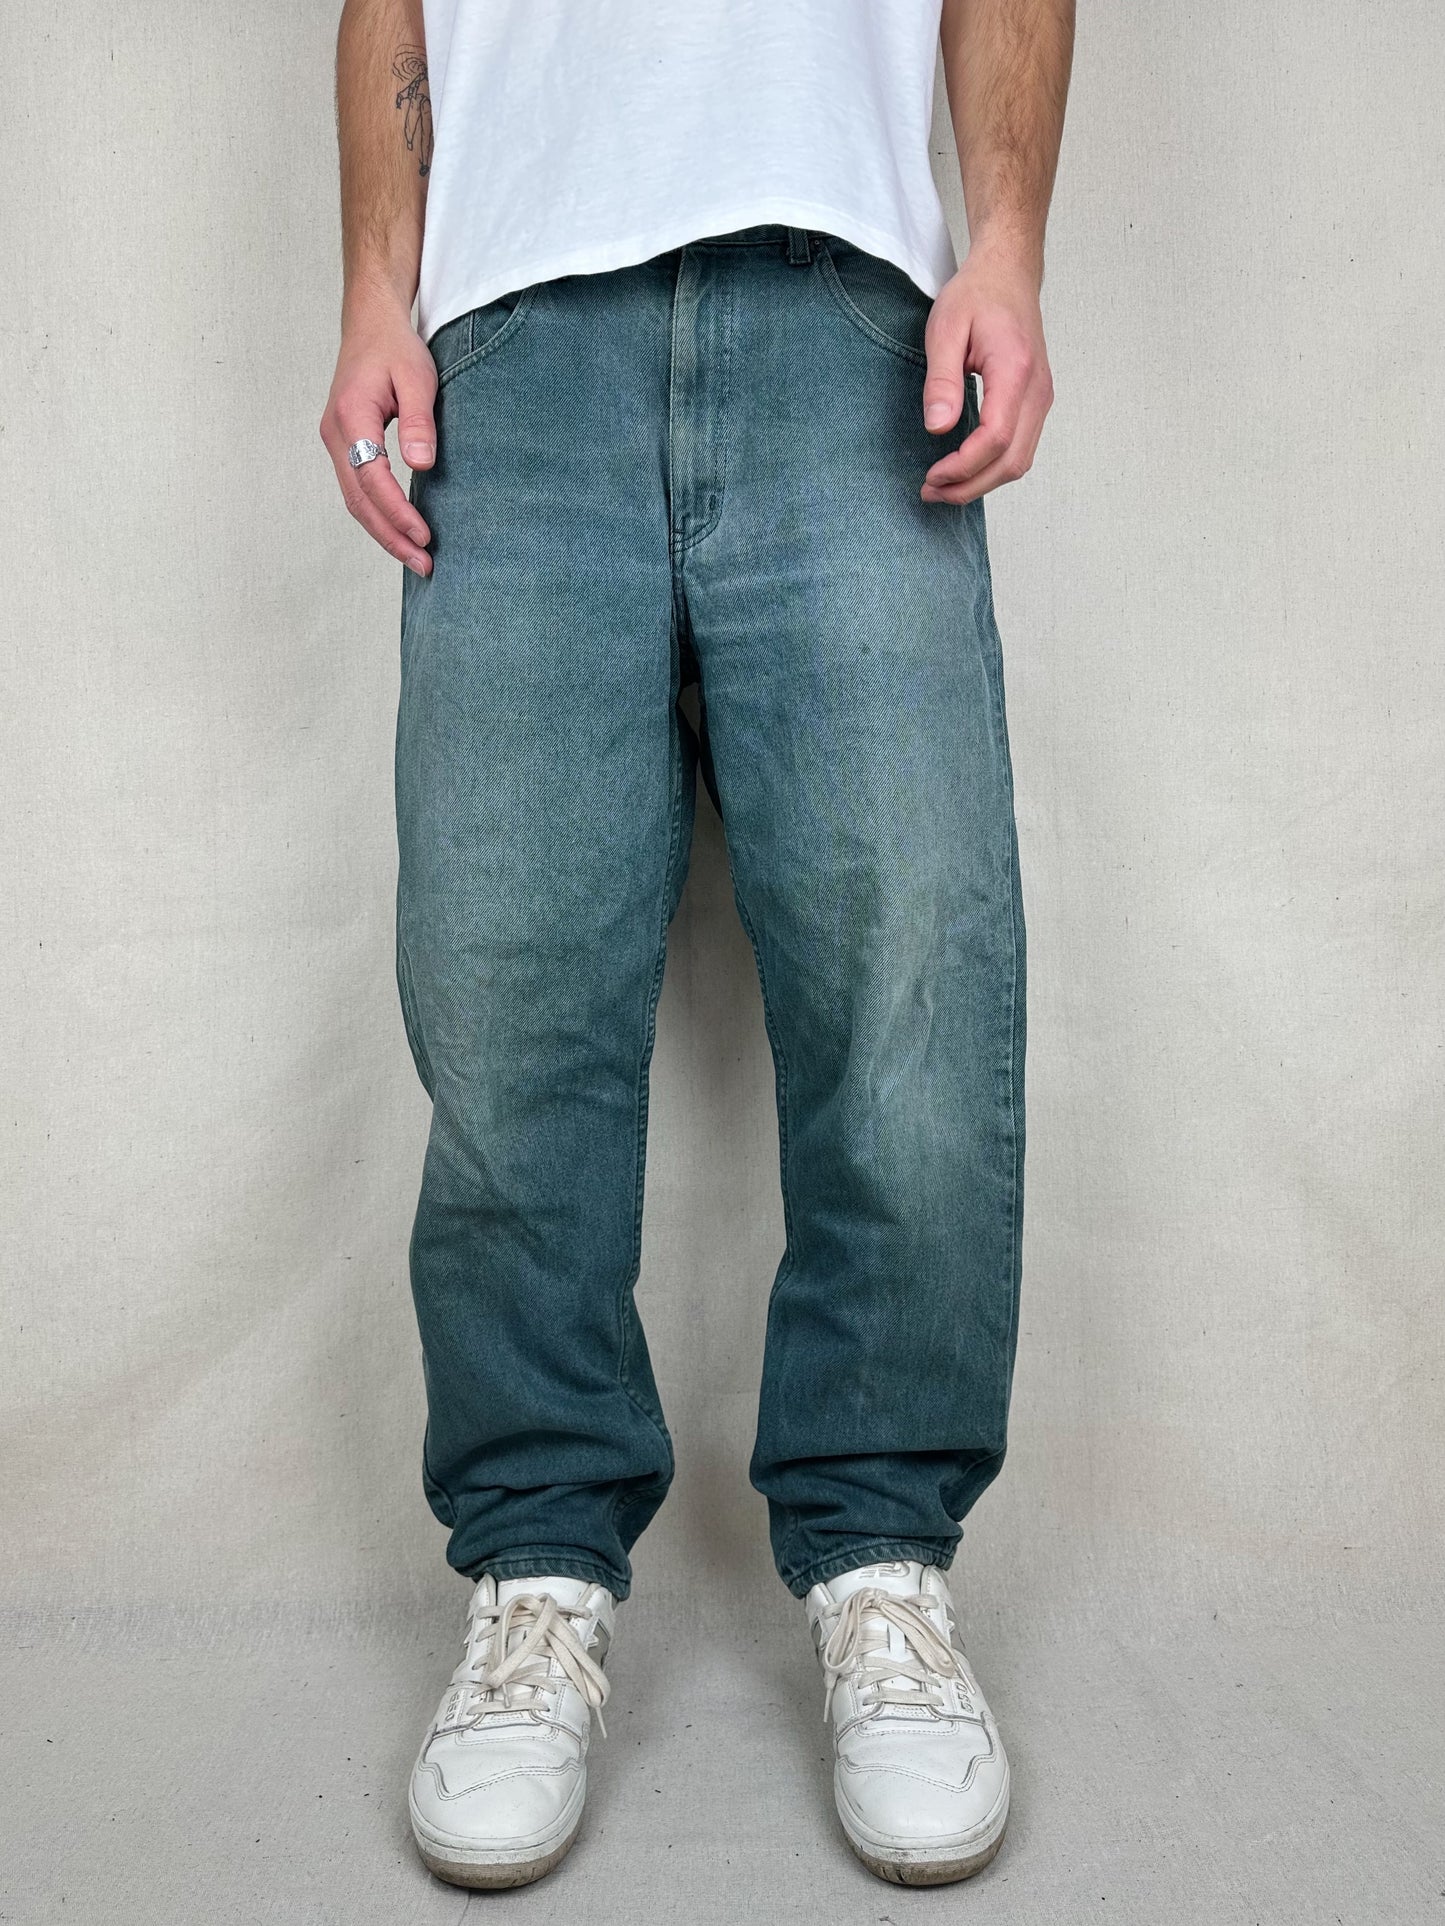 90's Vintage Turquoise Jeans Size 36x30